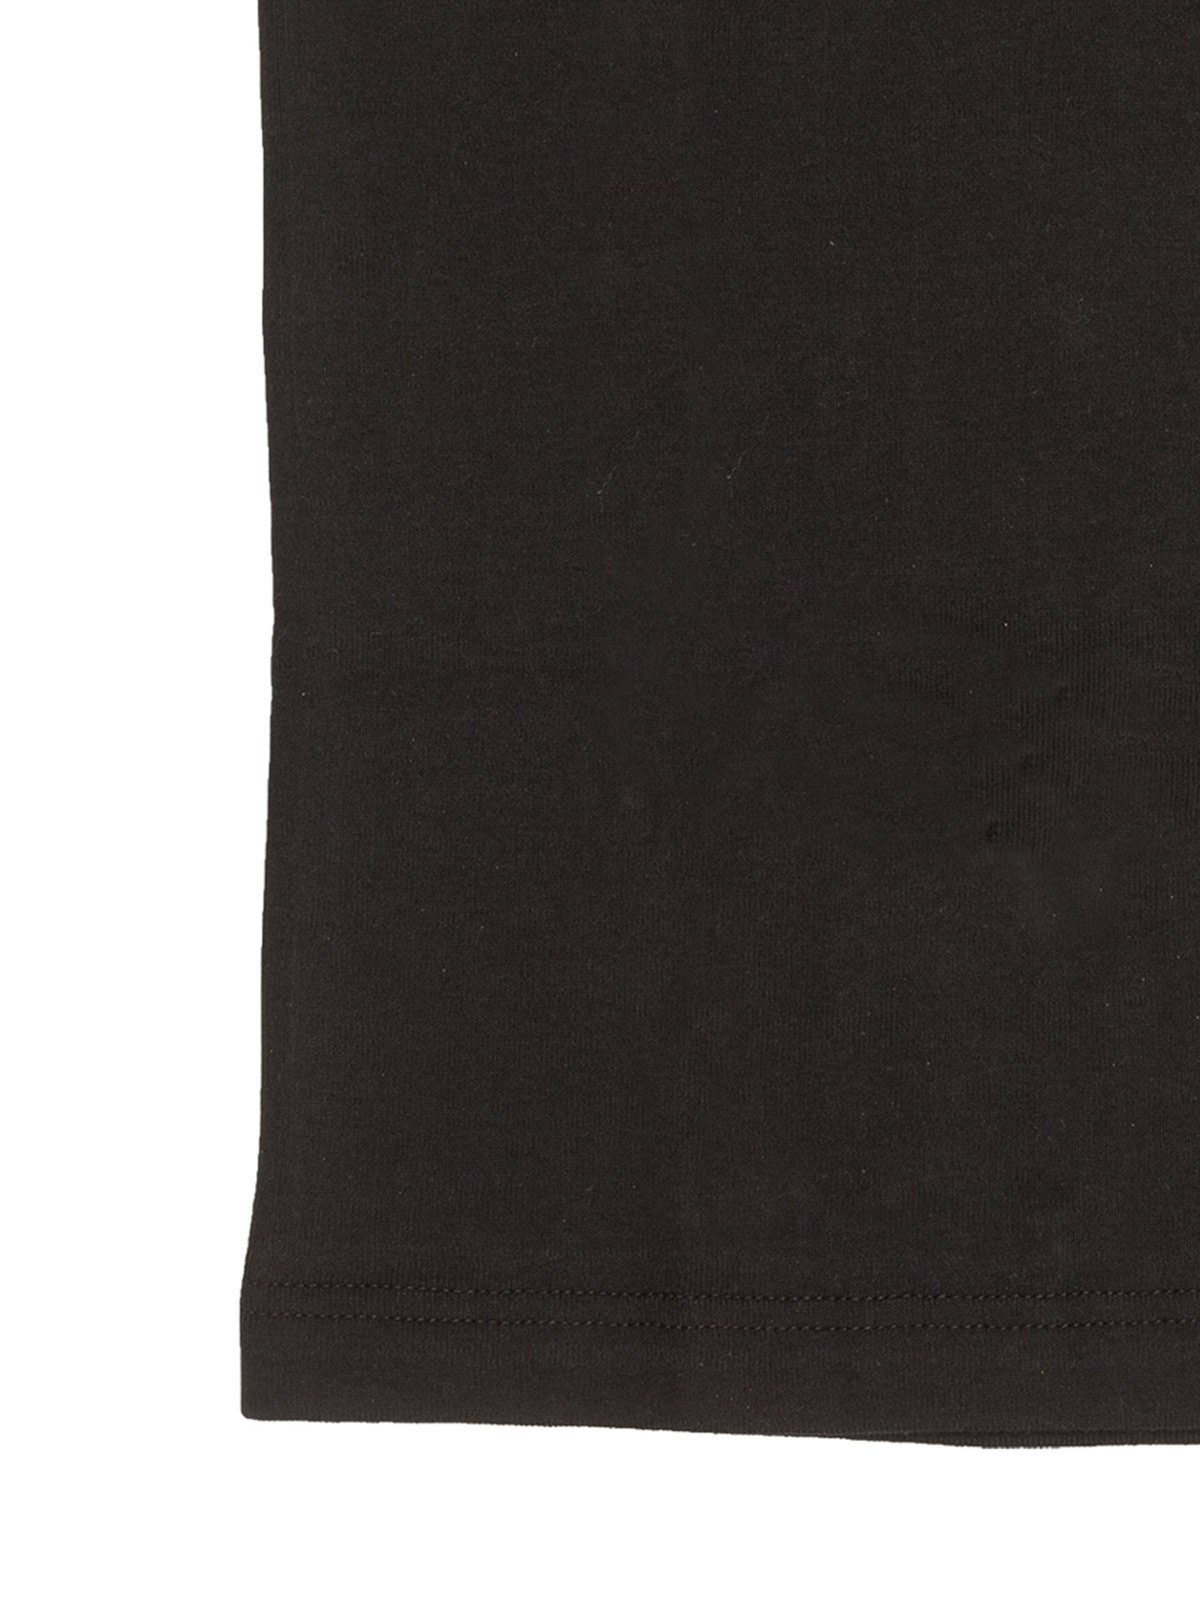 Sweety for Kids Unterhemd Achselhemd Knaben Markenqualität schwarz (Stück, 1-St) Feinripp hohe